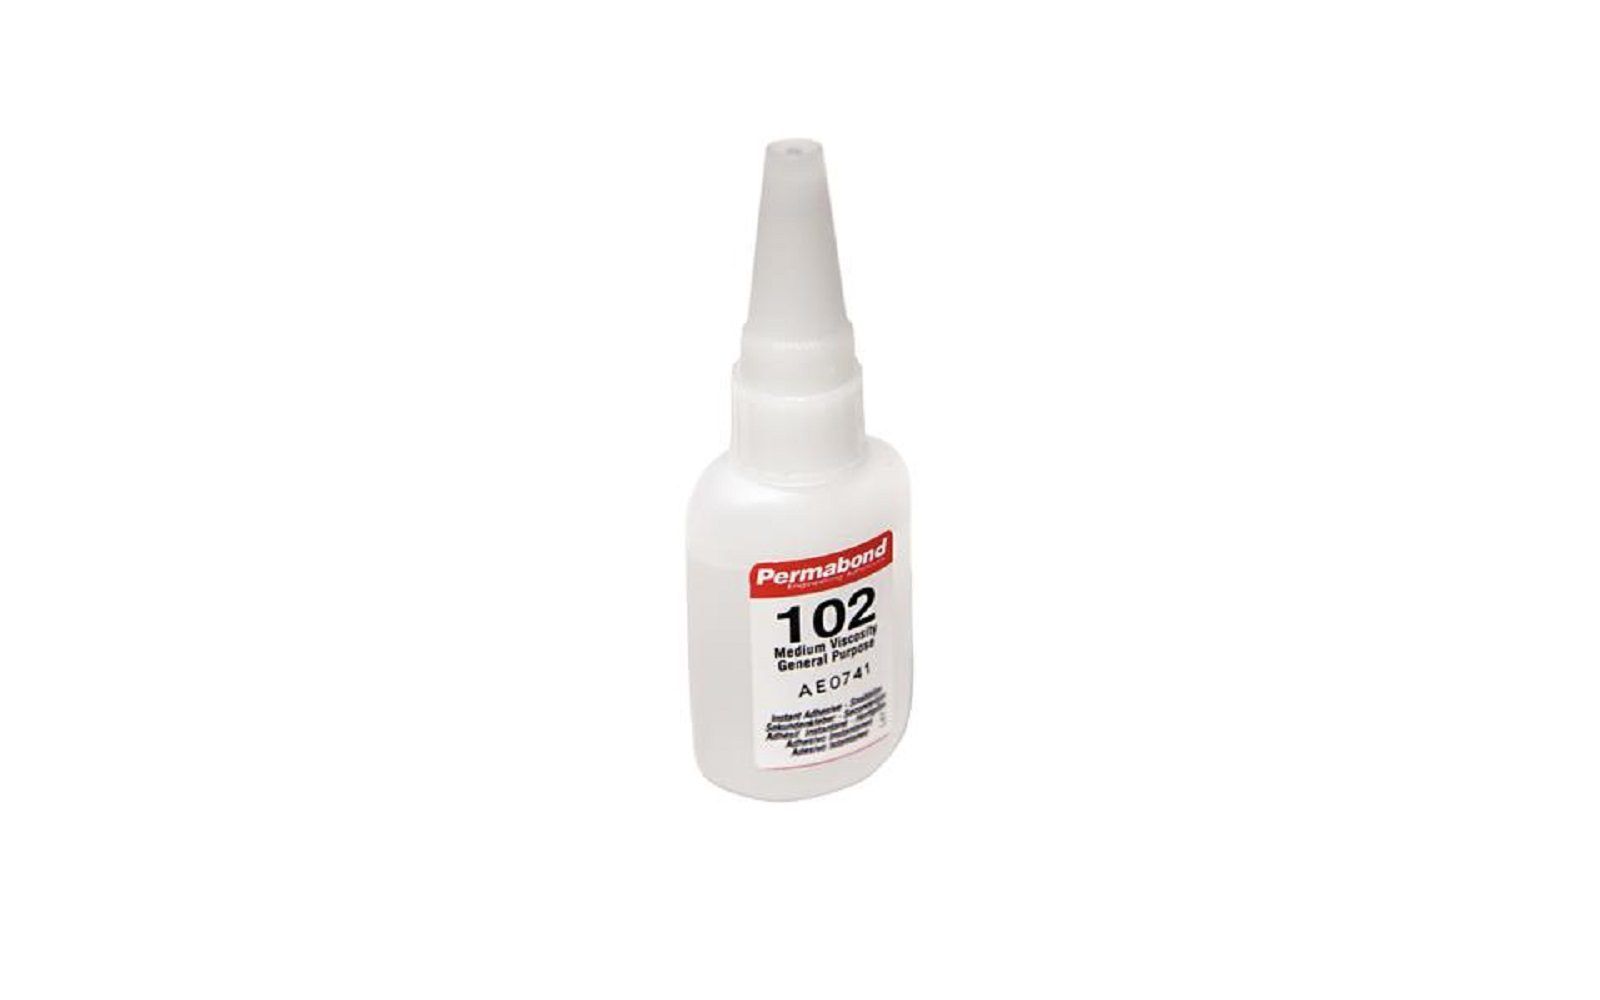 Permabond adhesive – 102 regular set, 1 oz bottle